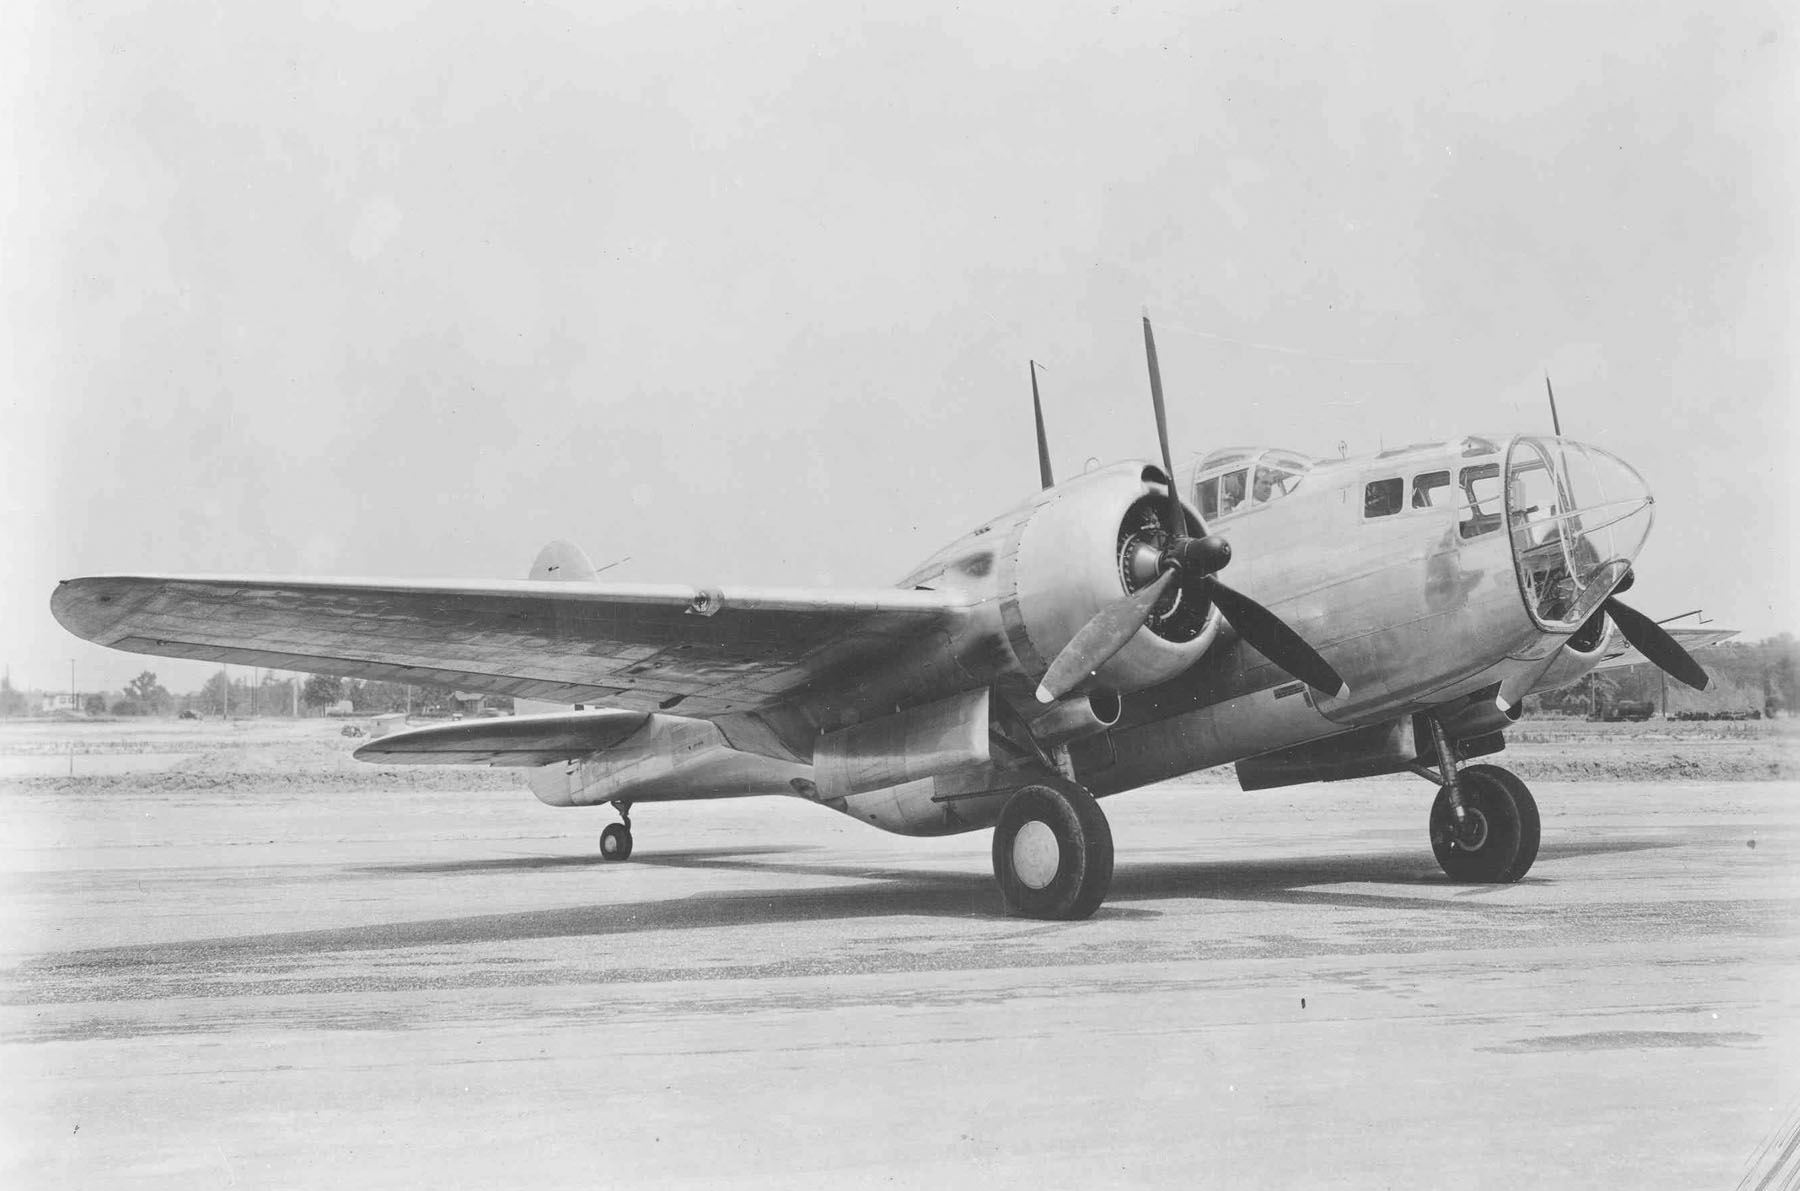 Probably a Martin Baltimore Mk. I or II. Photograph taken June 14, 1941.